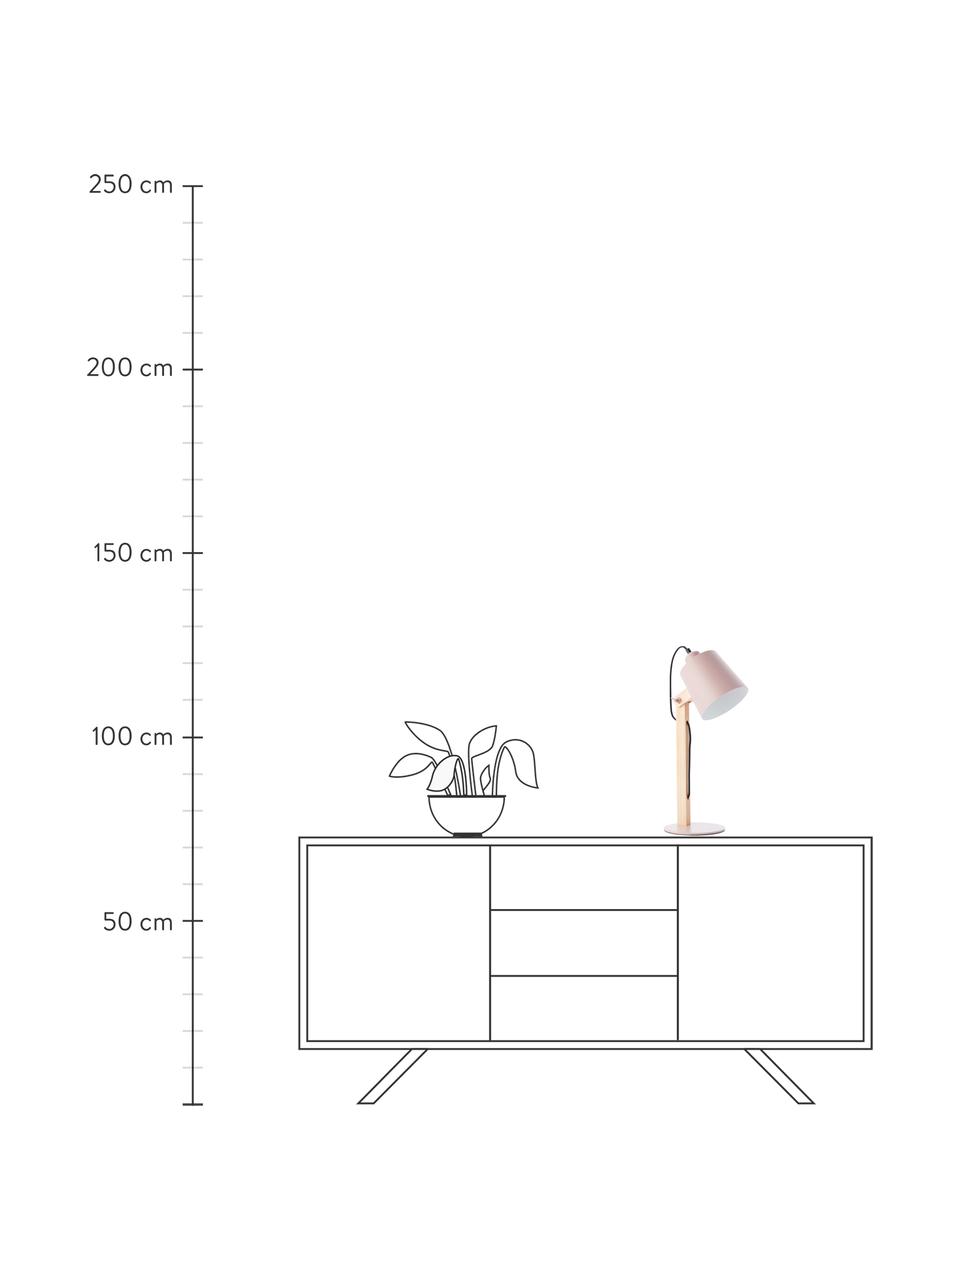 Große Schreibtischlampe Swivel mit Holzfuß, Lampenschirm: Metall, Lampenfuß: Metall, Rosa, Helles Holz, B 16 x H 52 cm